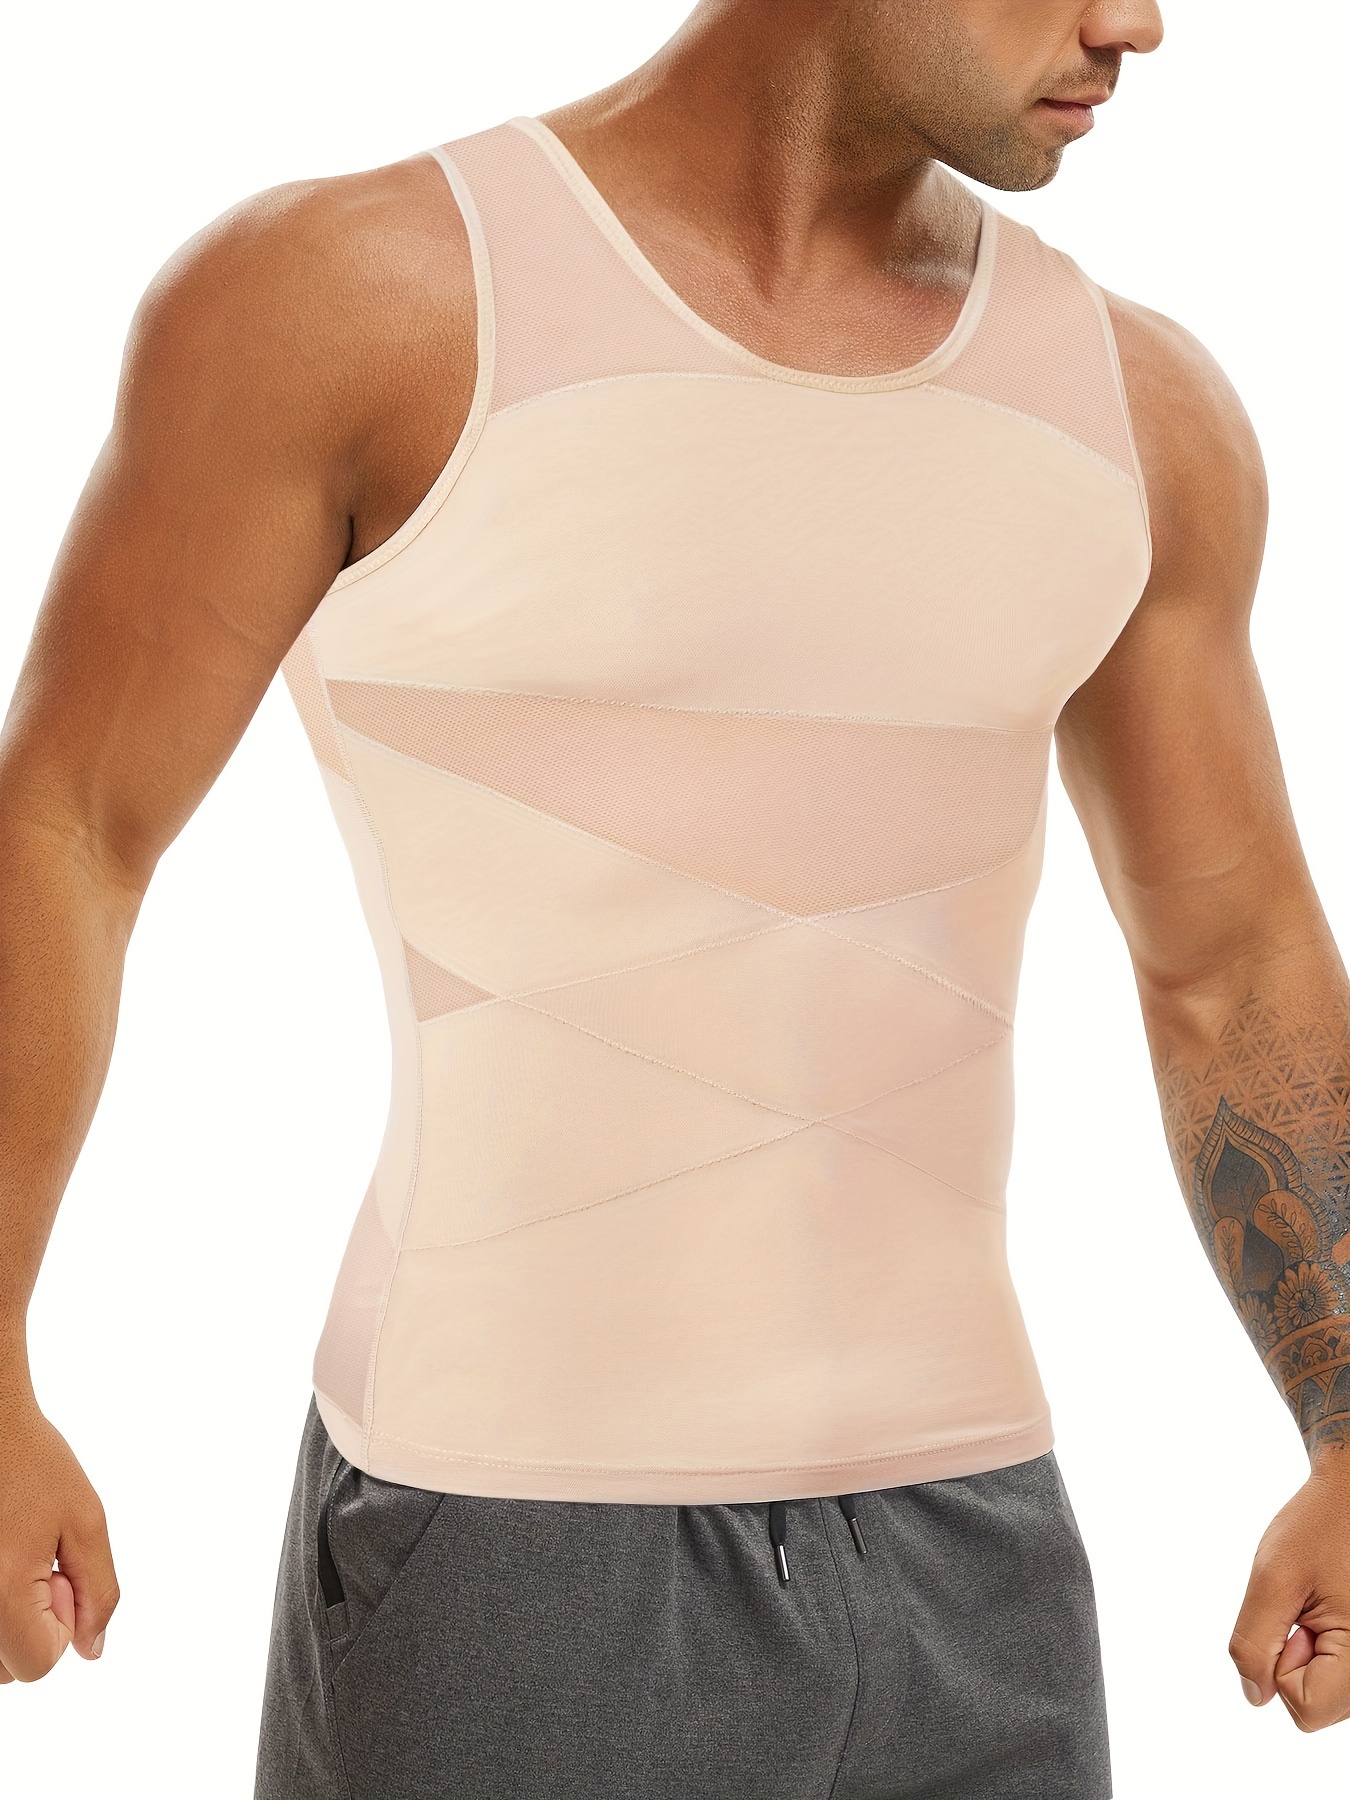 * Men Sauna Vest Waist Trainer Double Hook And Loop Fastener Body Shaper  For Belly Fat Slimming Workout Tank Top